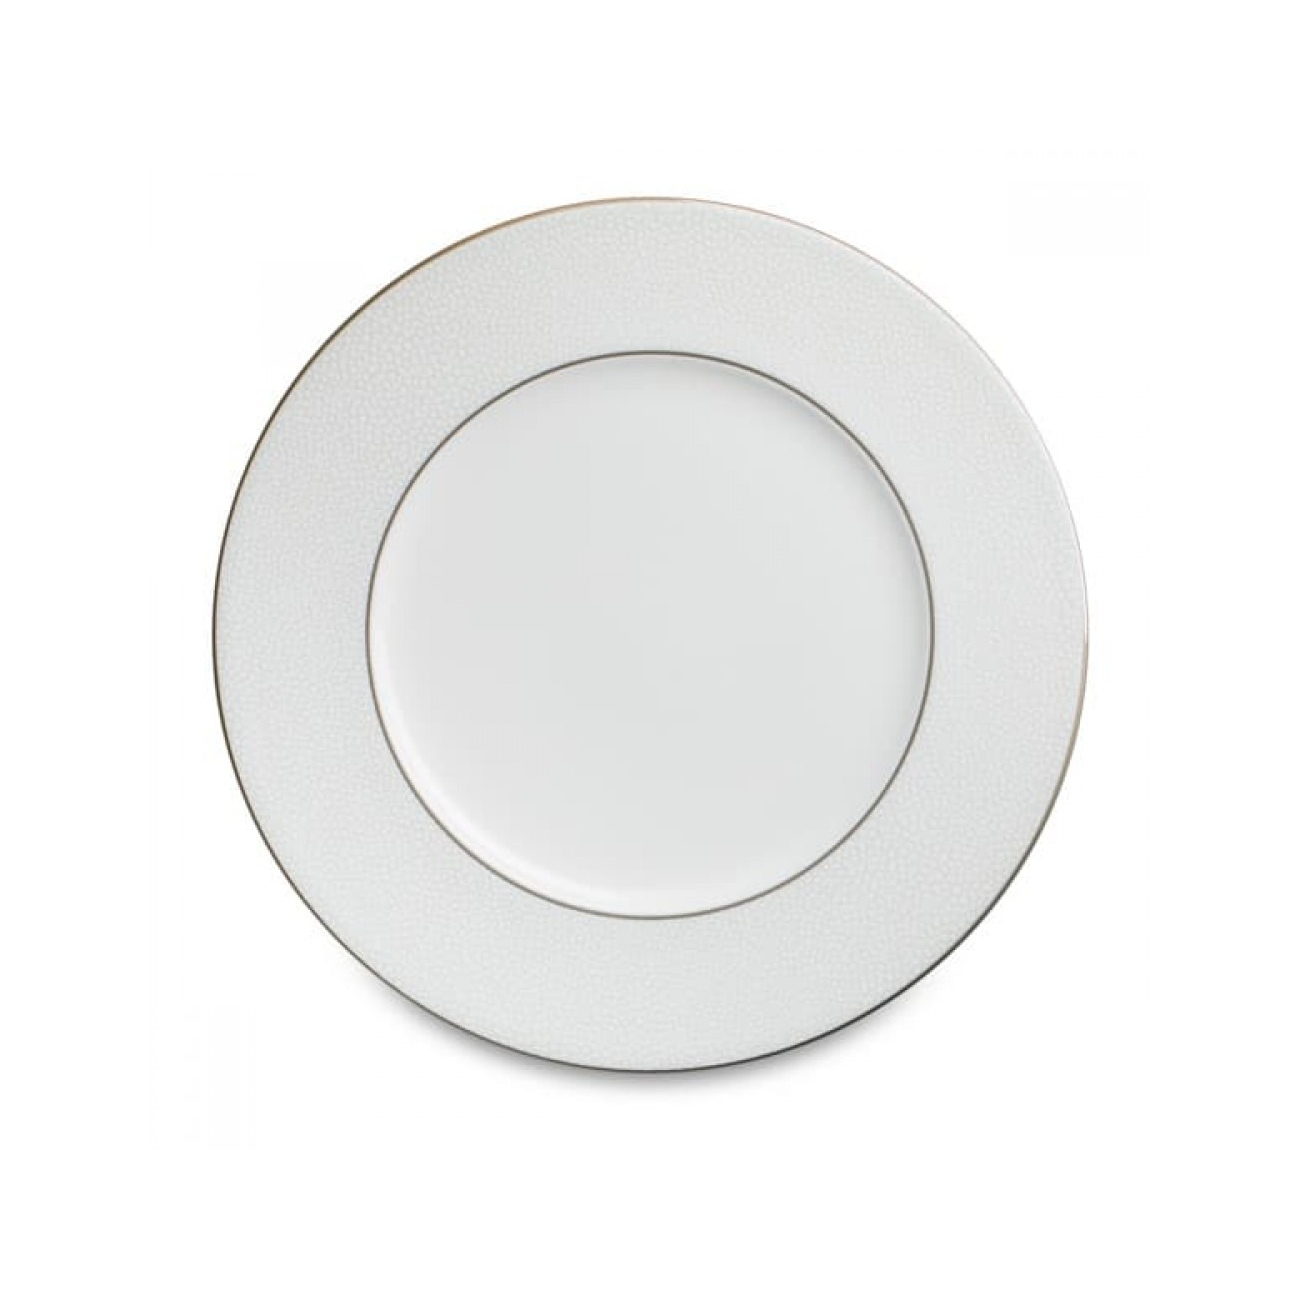 Тарелка обеденная Narumi белый жемчуг 27 см тарелка обеденная narumi белый жемчуг 27 см